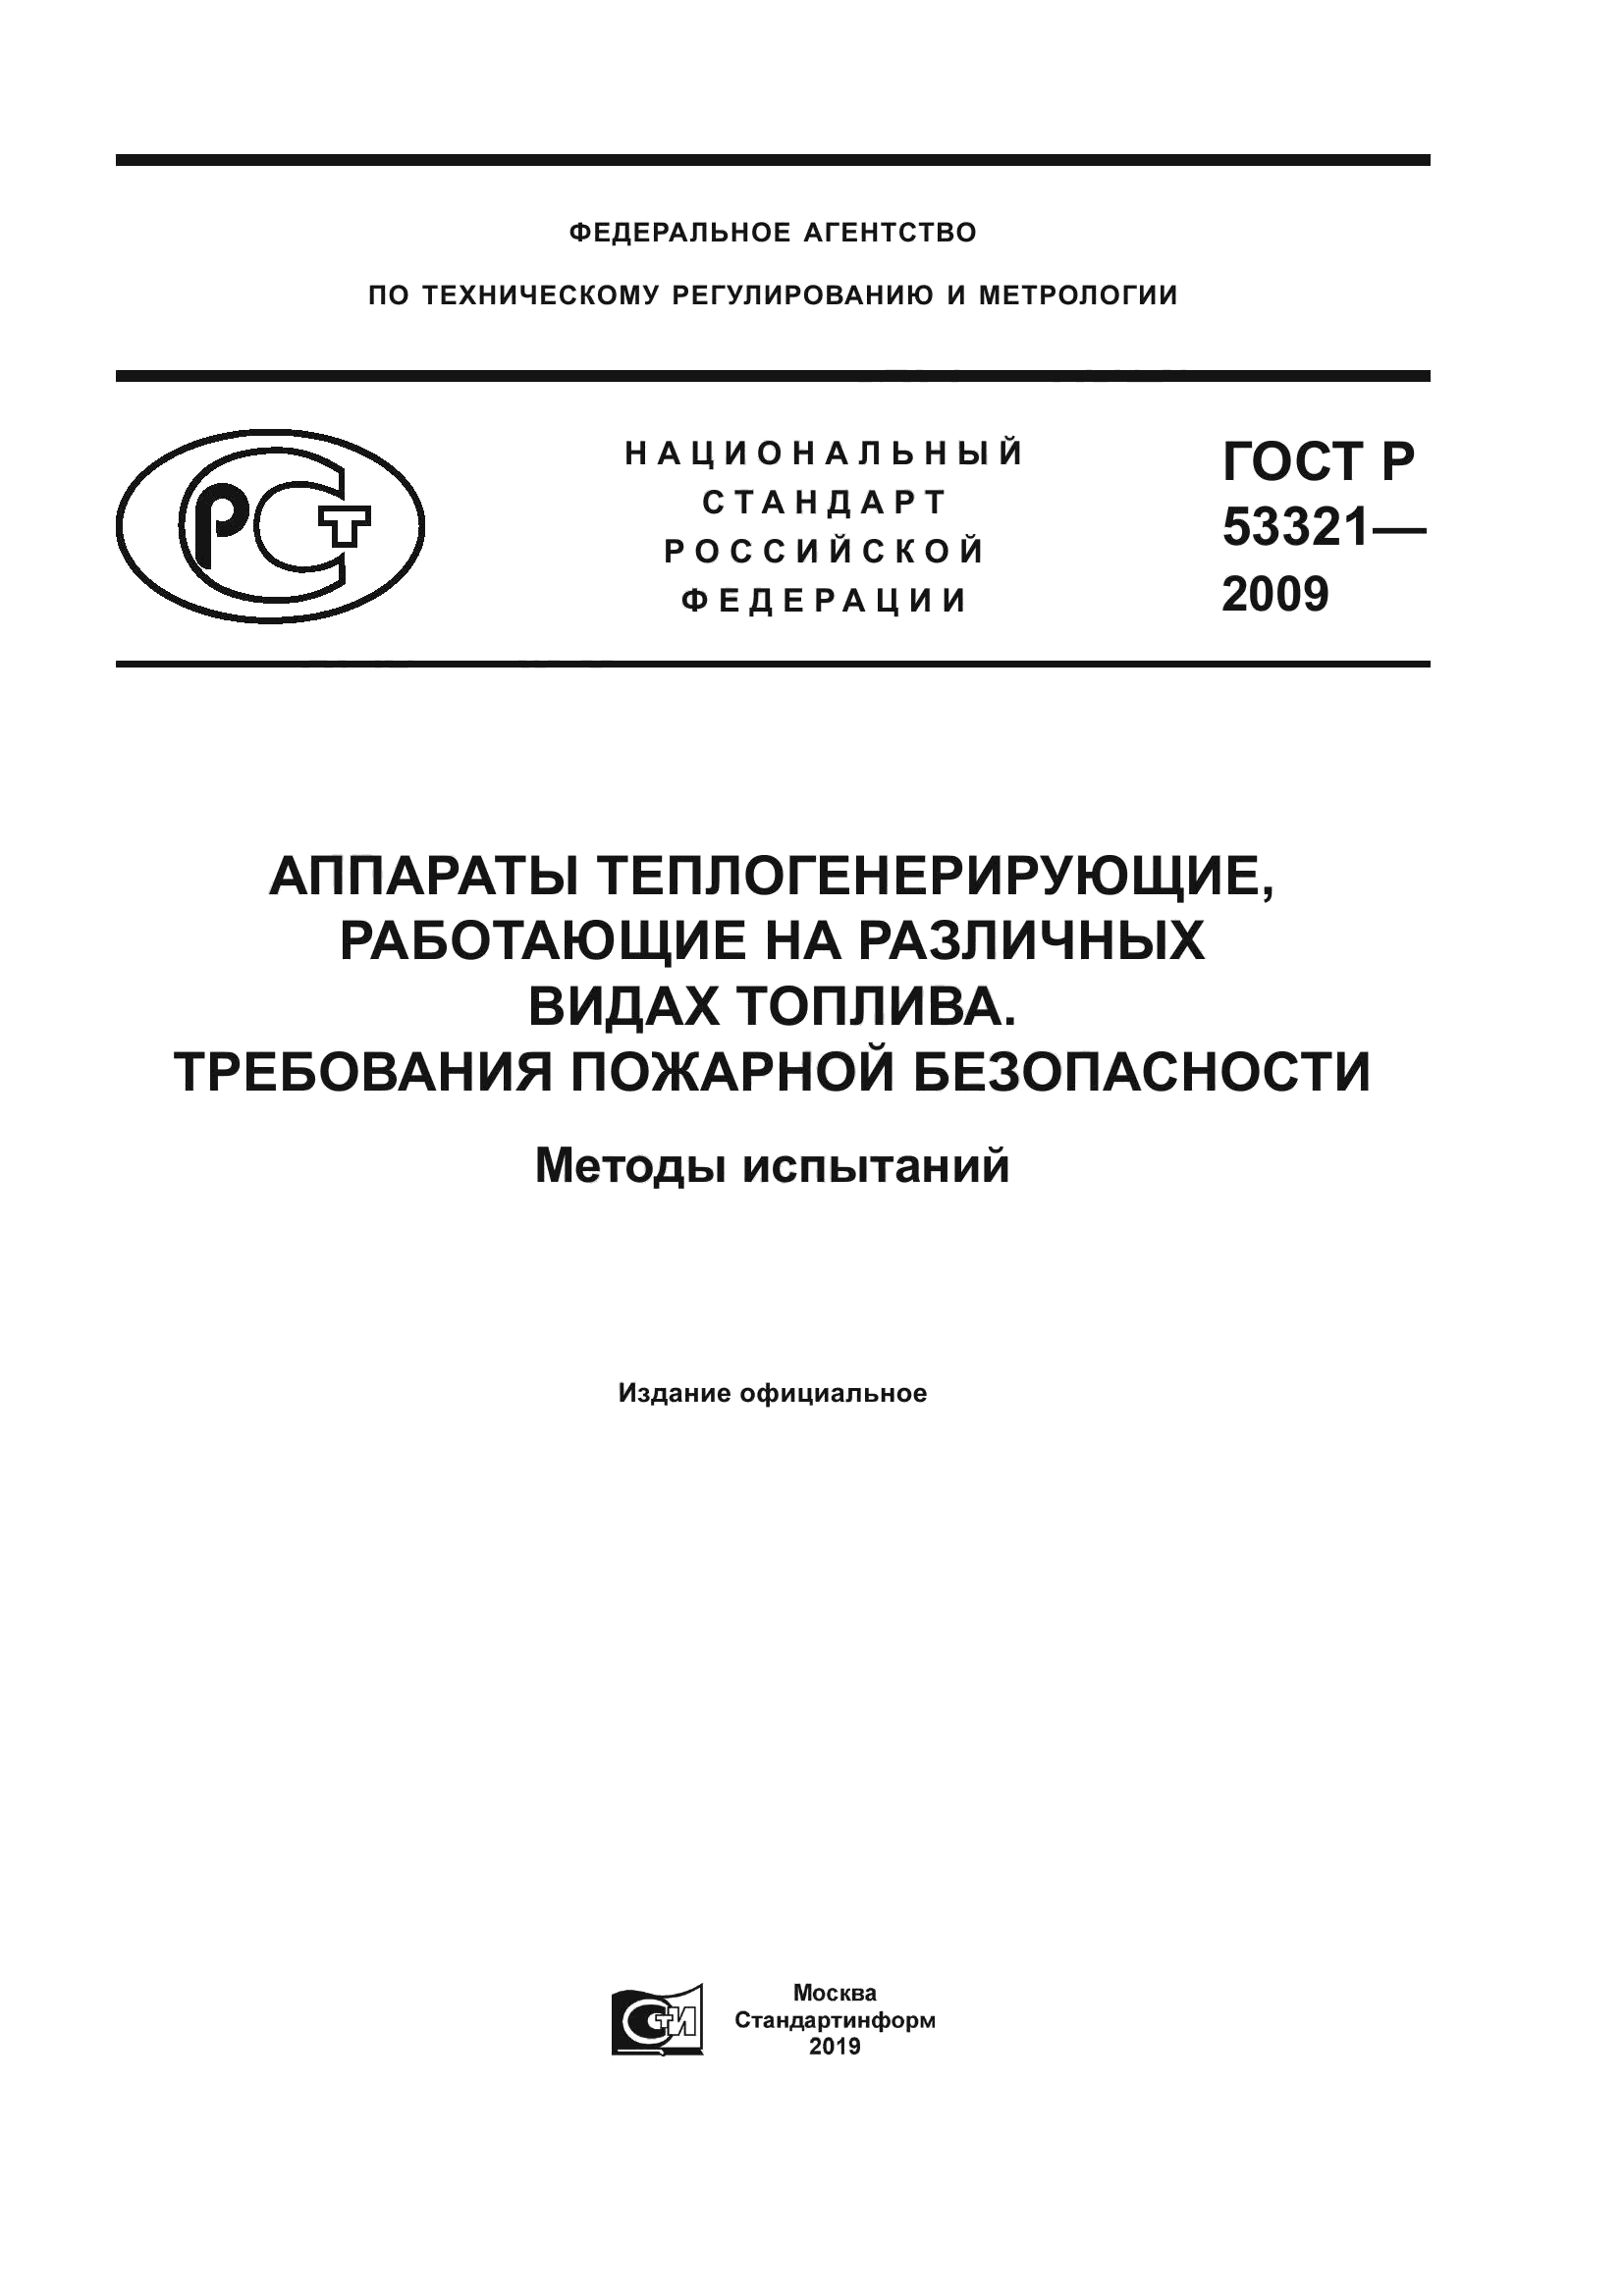 ГОСТ Р 53321-2009